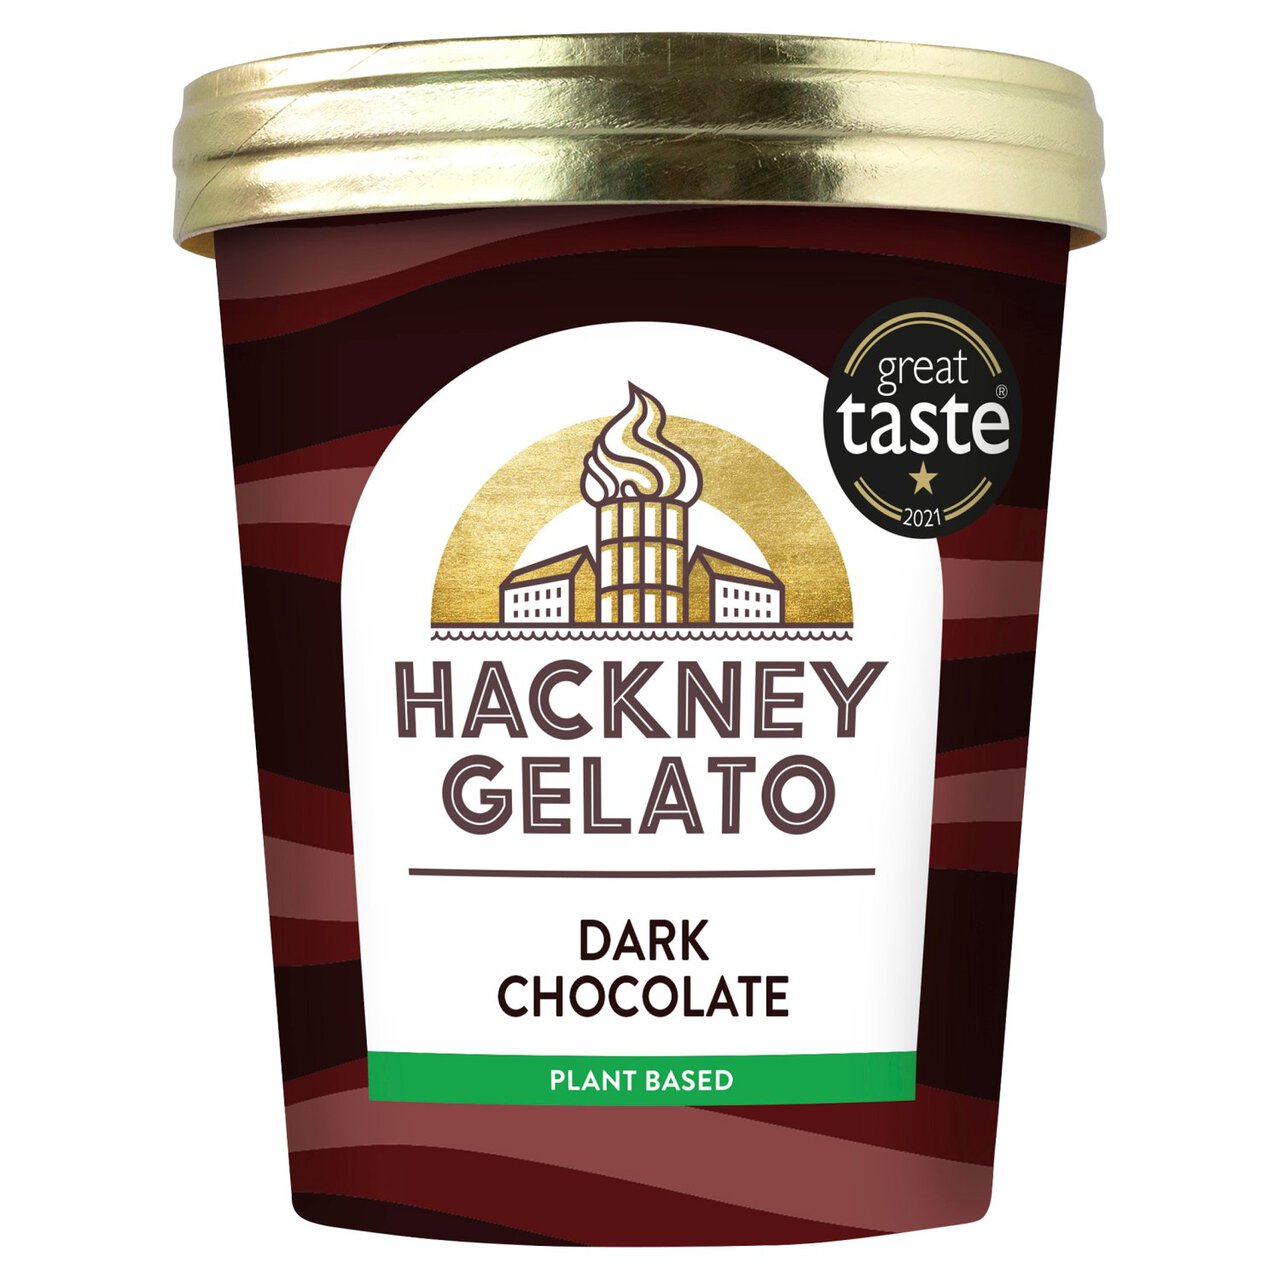 Hackney Gelato Dark Chocolate Sorbetto 460ml